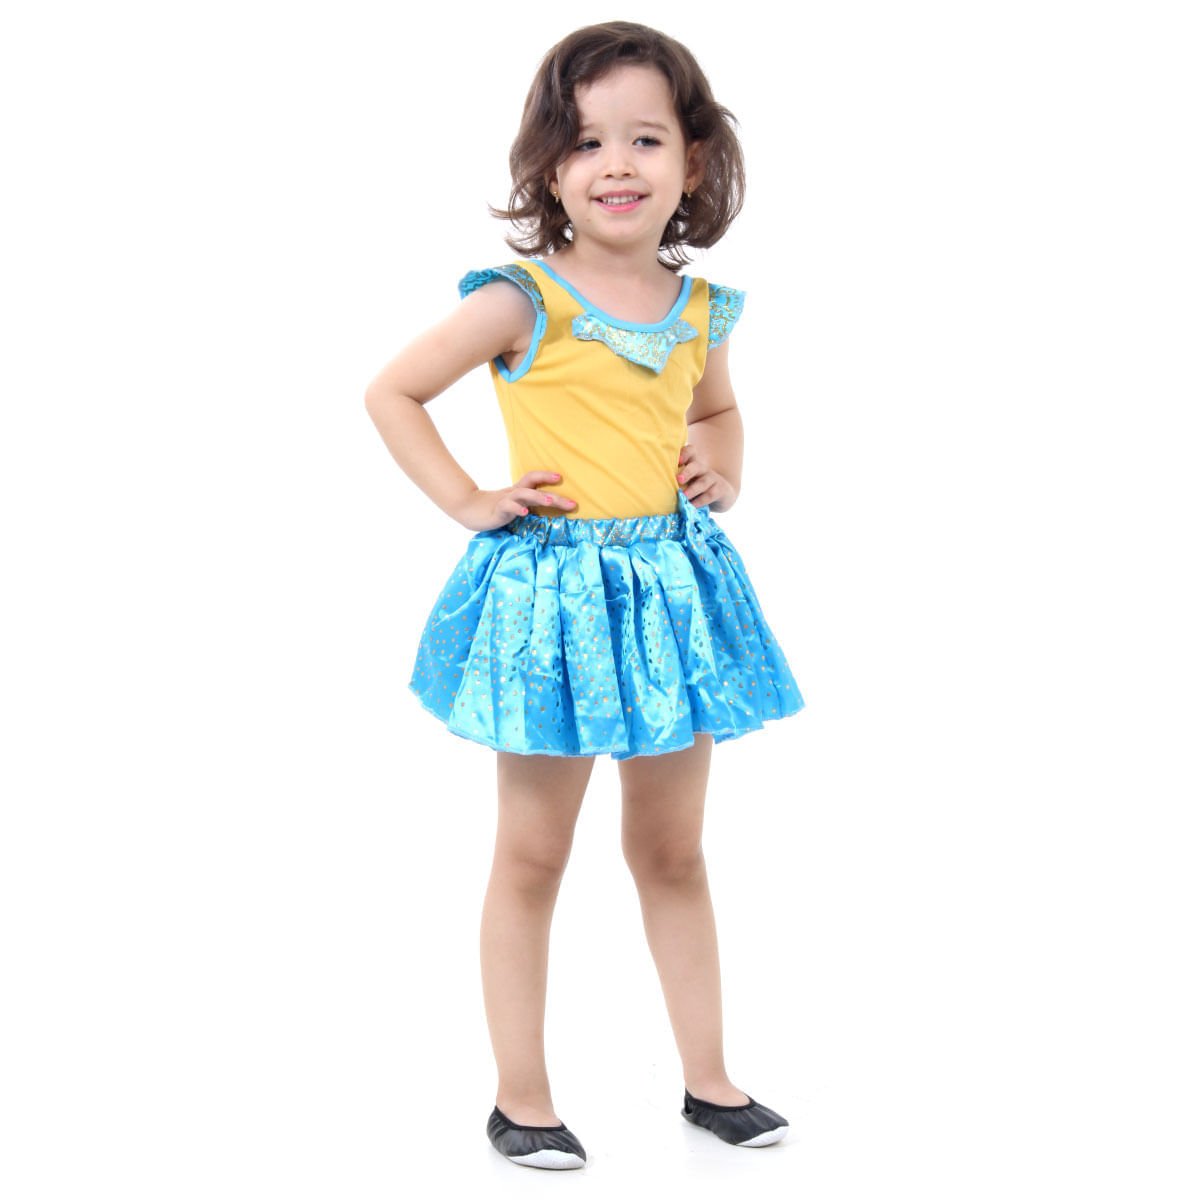 Fantasia Bailarina Amarelo / Azul Infantil - Carnaval P / UNICA